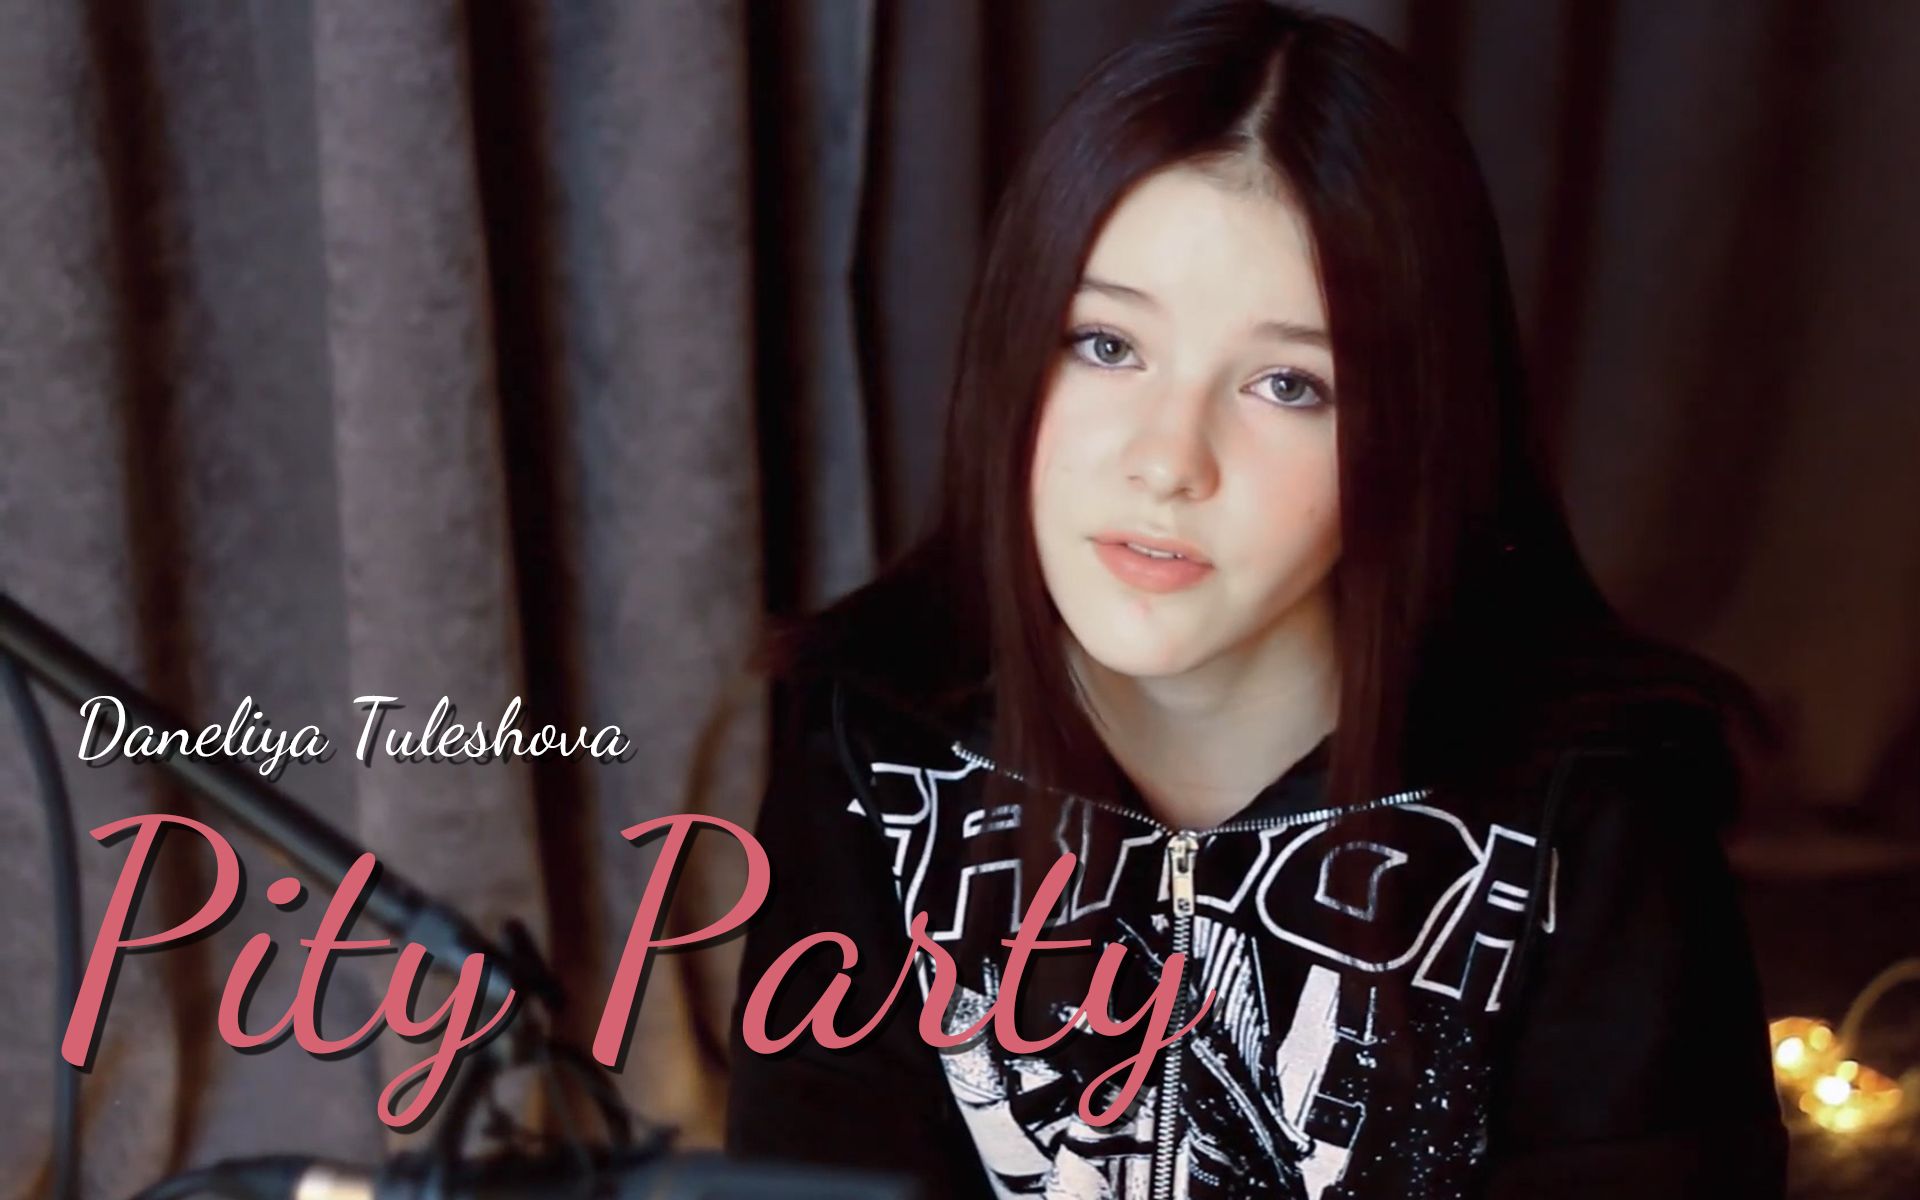 [1080p60]丹妮莉娅翻唱《pity party》by melanie martinez